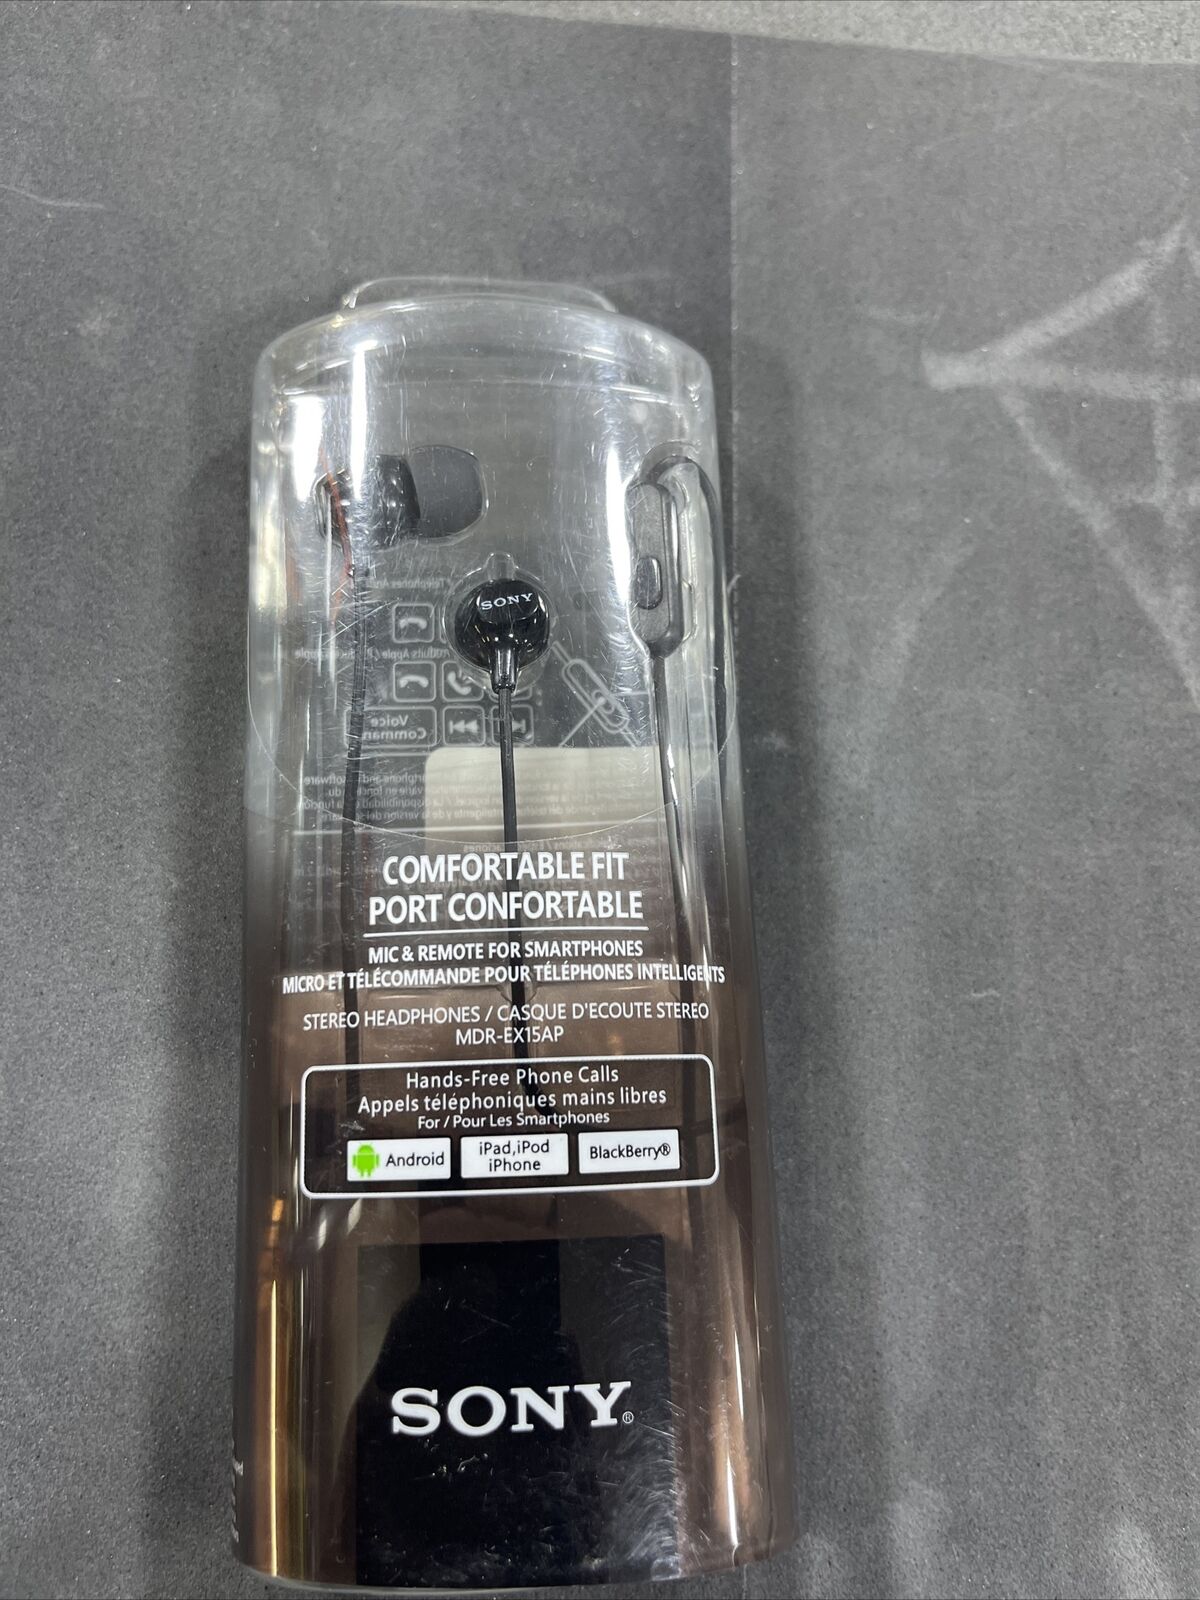 Sony MDR-EX15AP In-Ear Wired Headphones - Black